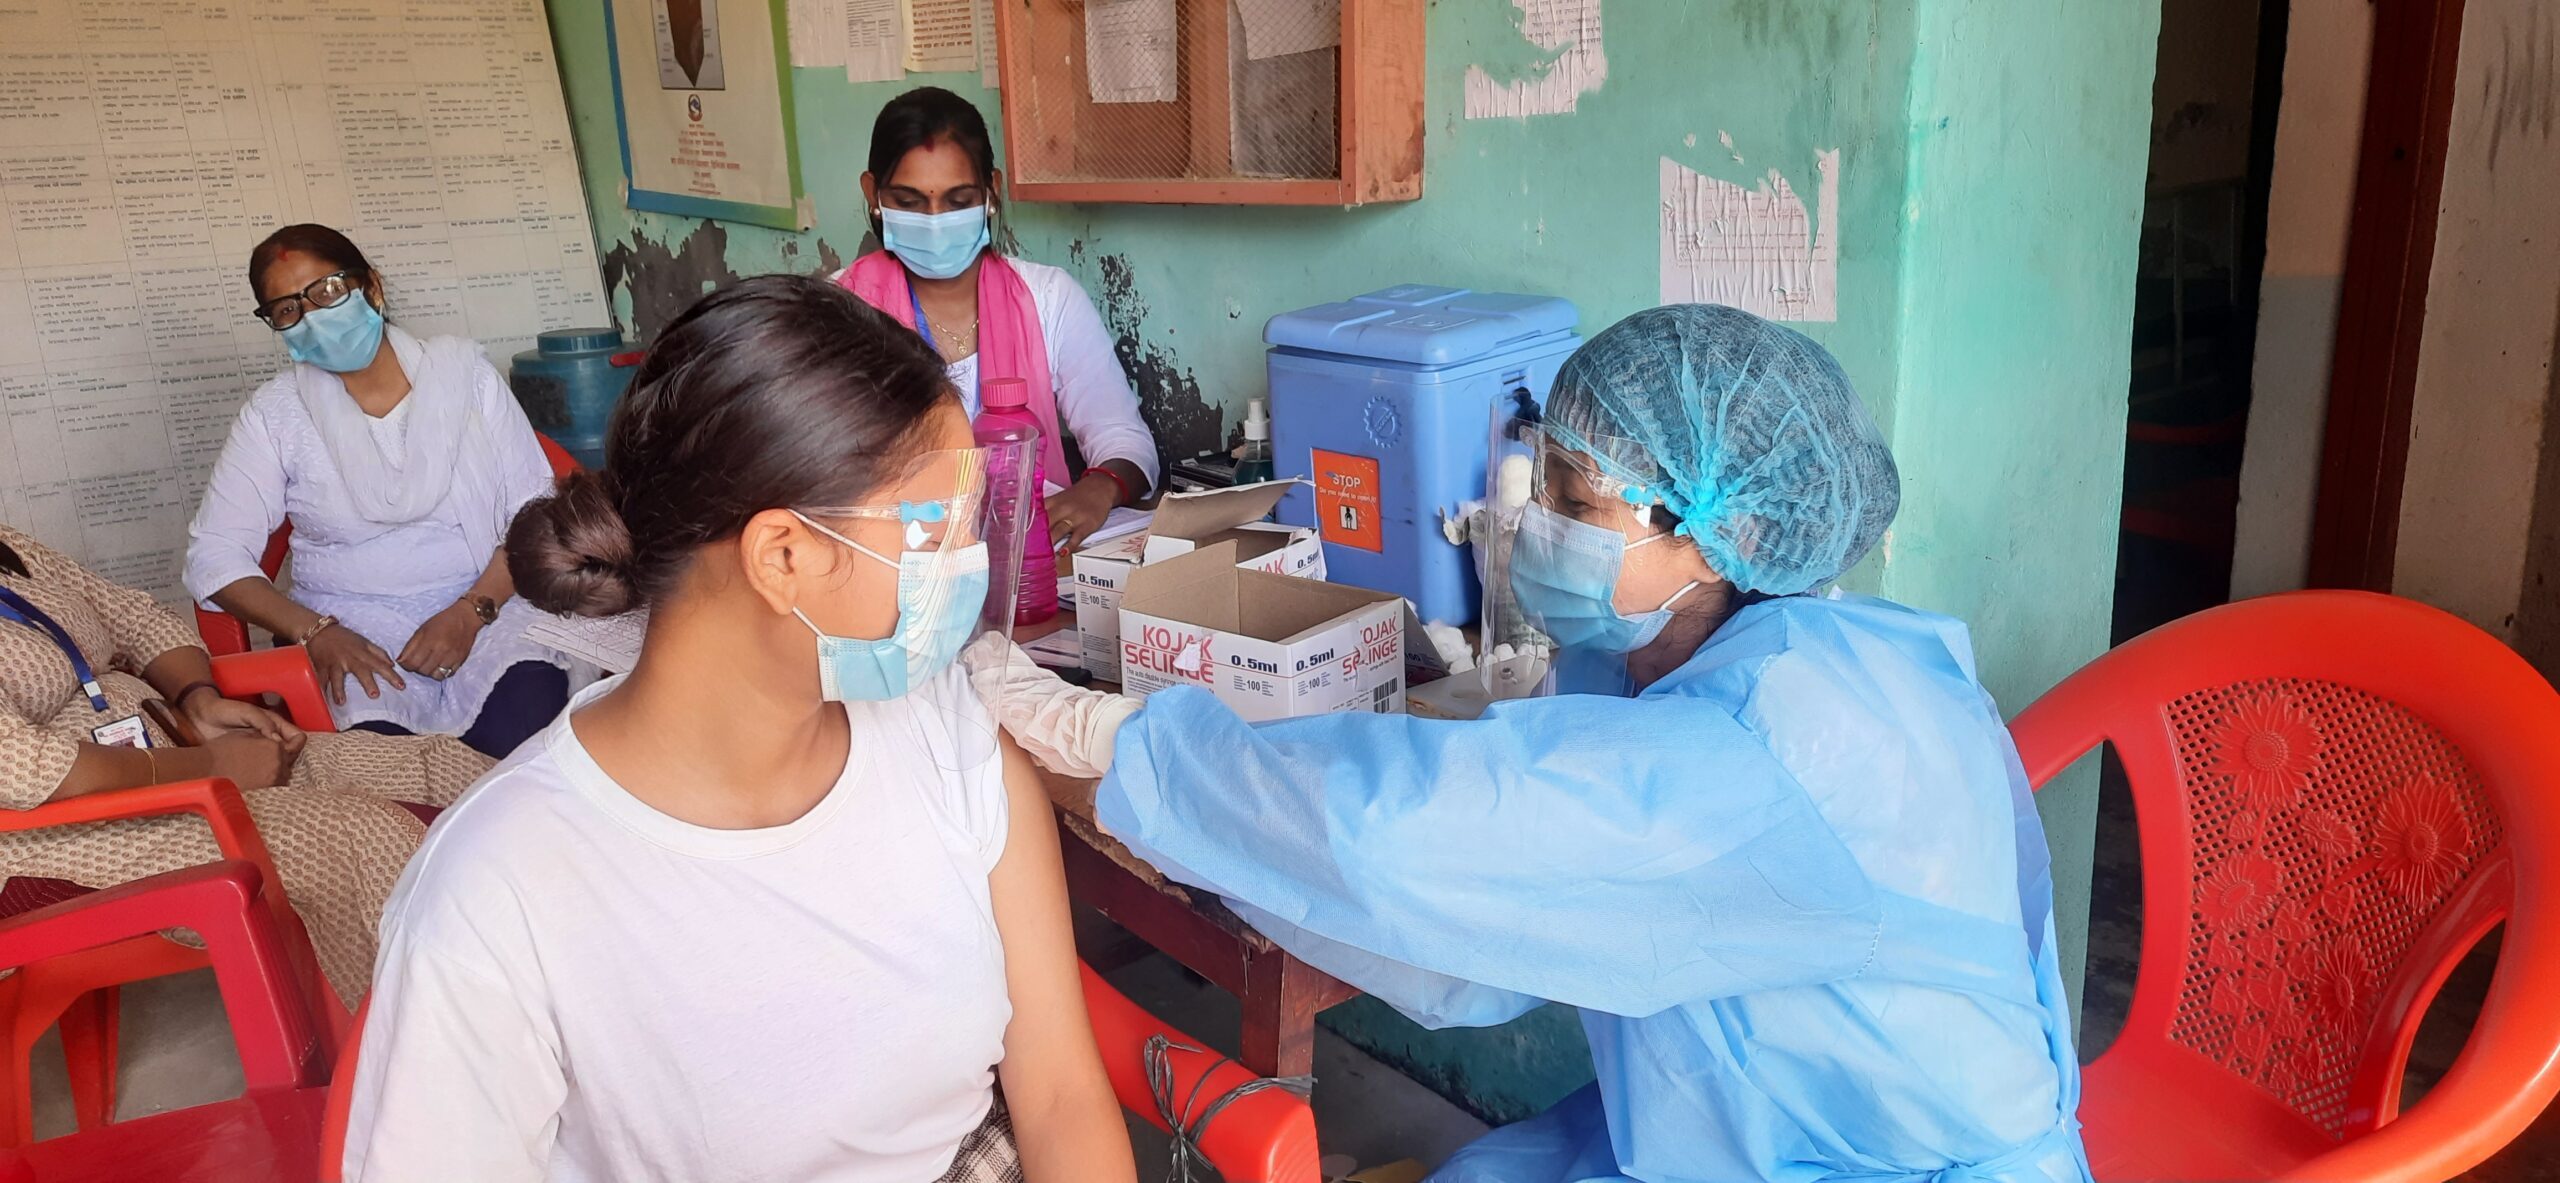 Kreetisha receiving COVID-19 vaccine